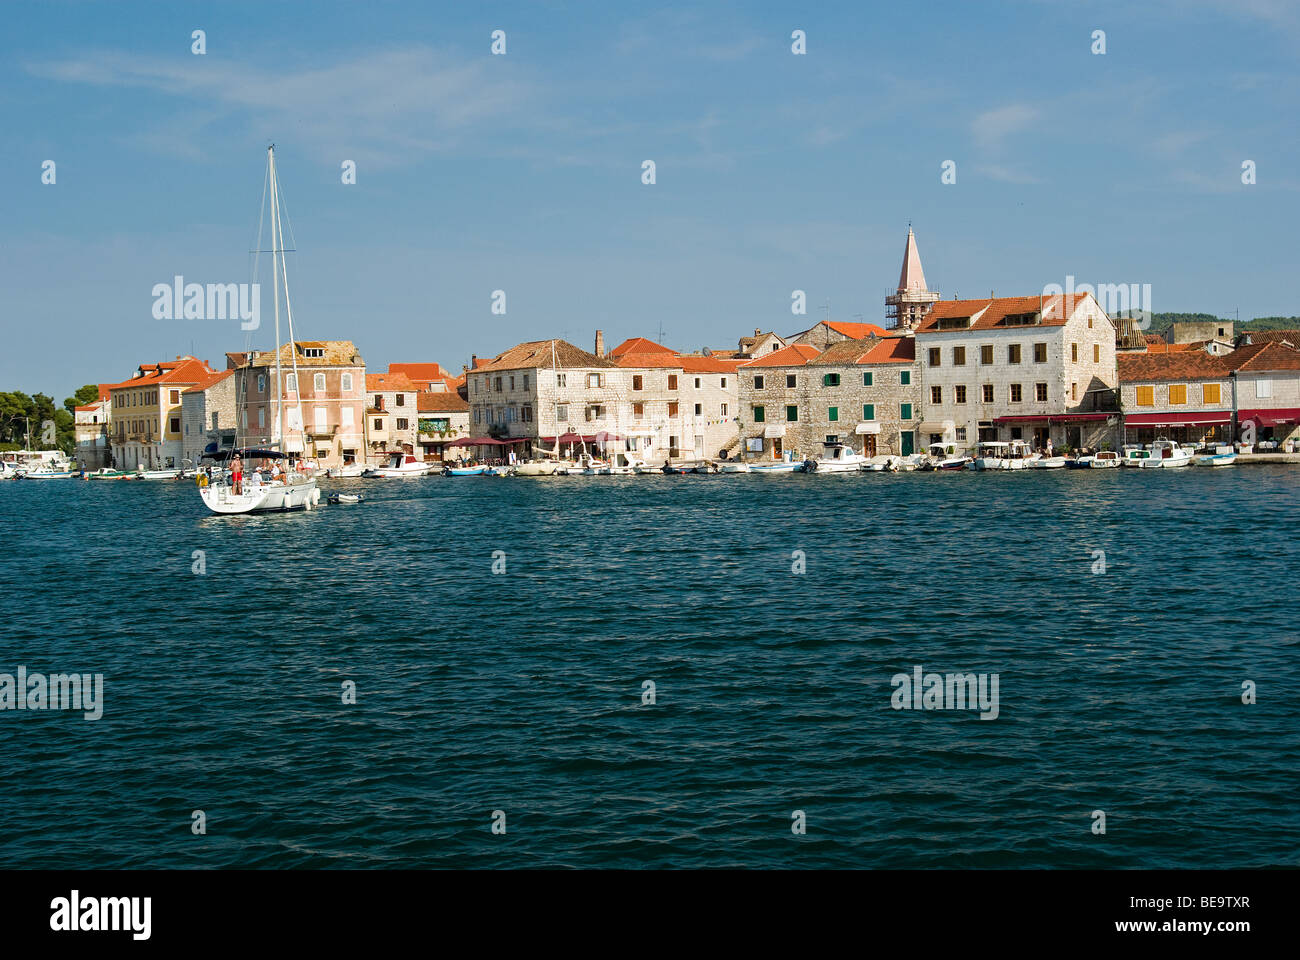 Croatia; Hrvartska; Kroatien, Hvar Island; Strai Grad, fishboats tied-up on waterfront of old town Stock Photo